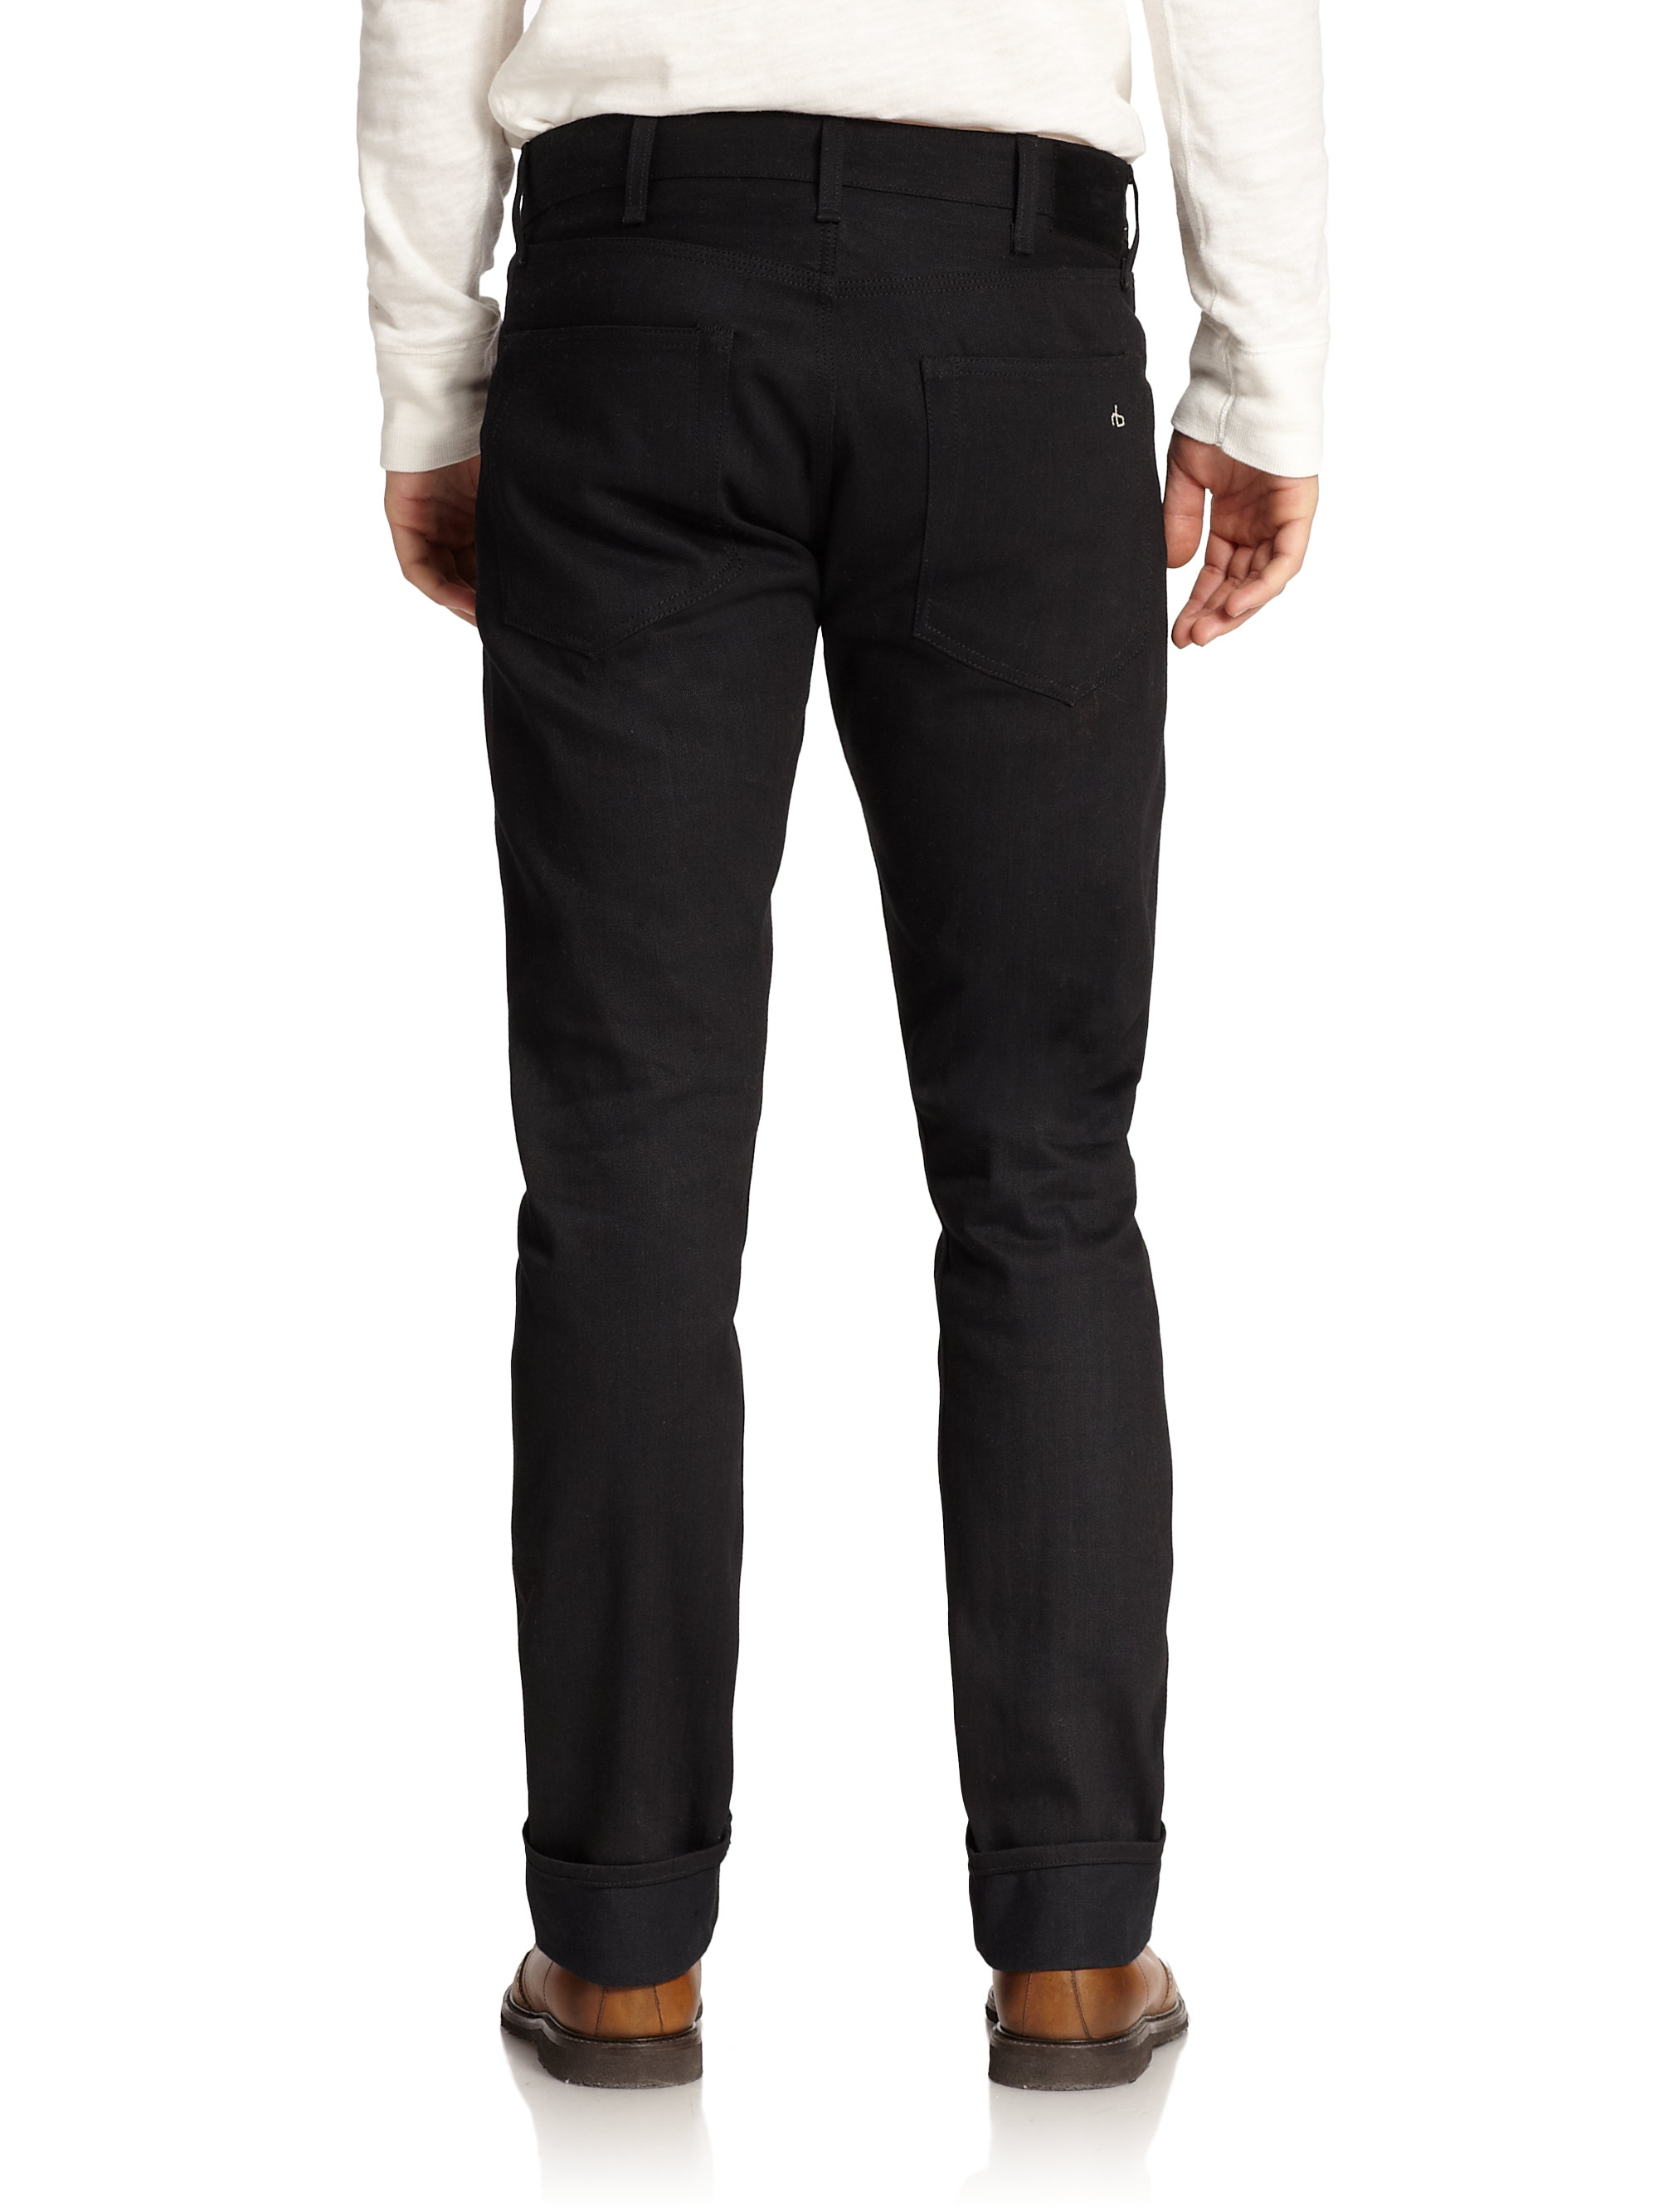 Lyst - Rag & Bone Standard Issue Fit 2 Slim-leg Jeans in Black for Men